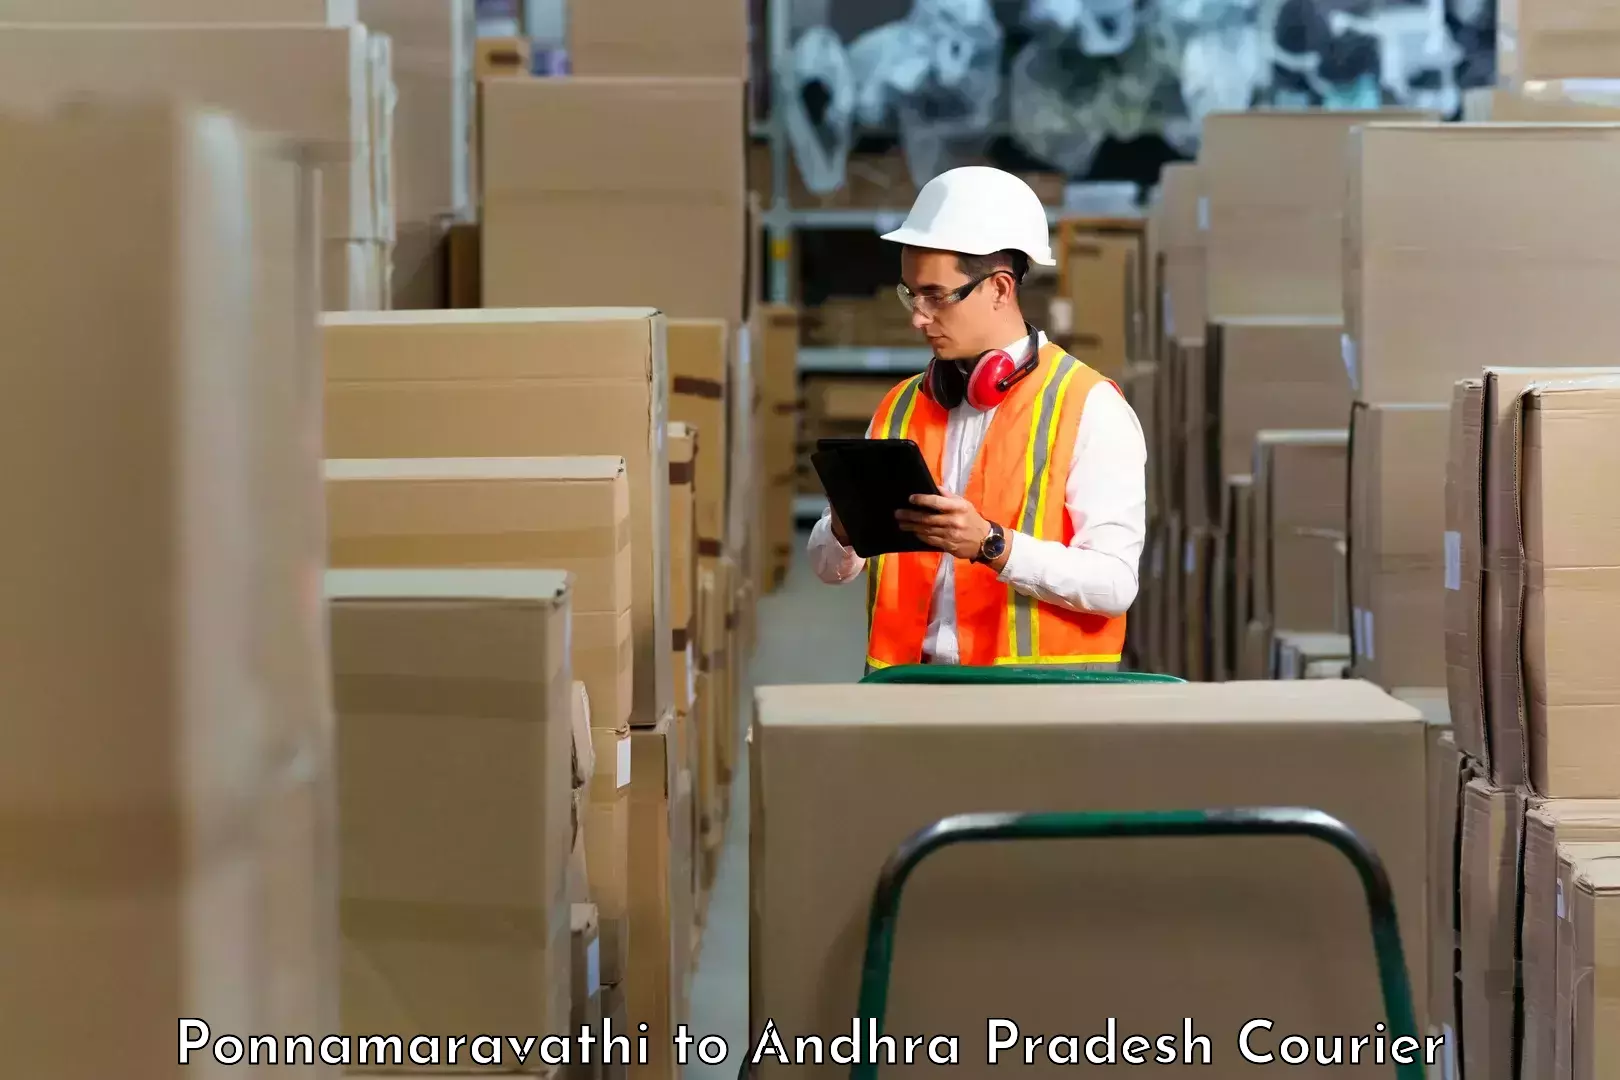 User-friendly courier app Ponnamaravathi to Andhra Pradesh